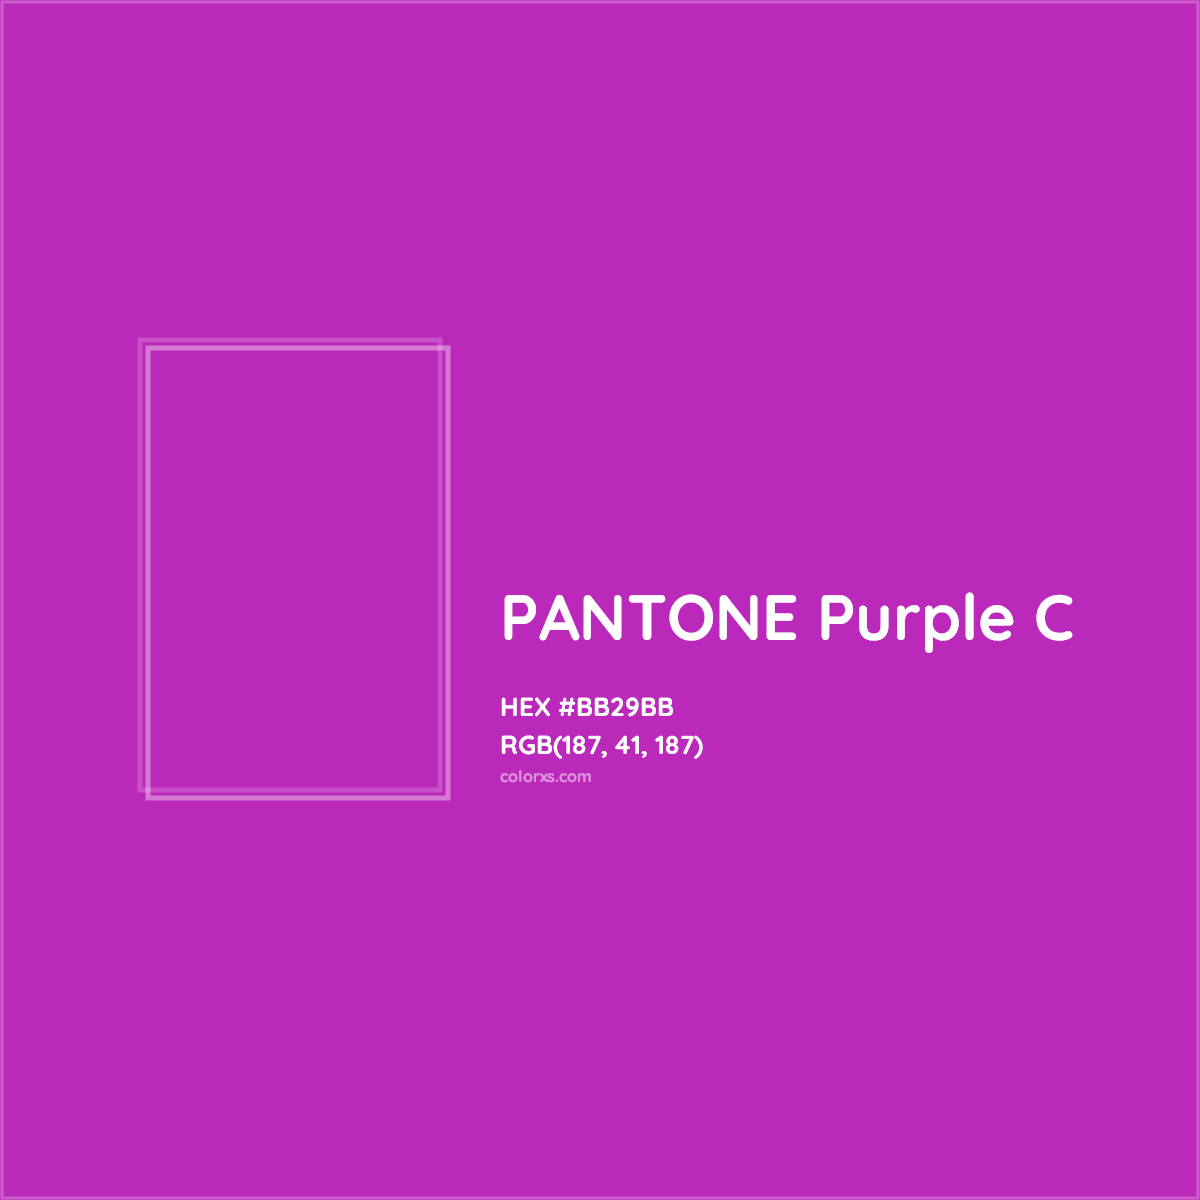 Pantone Violet C